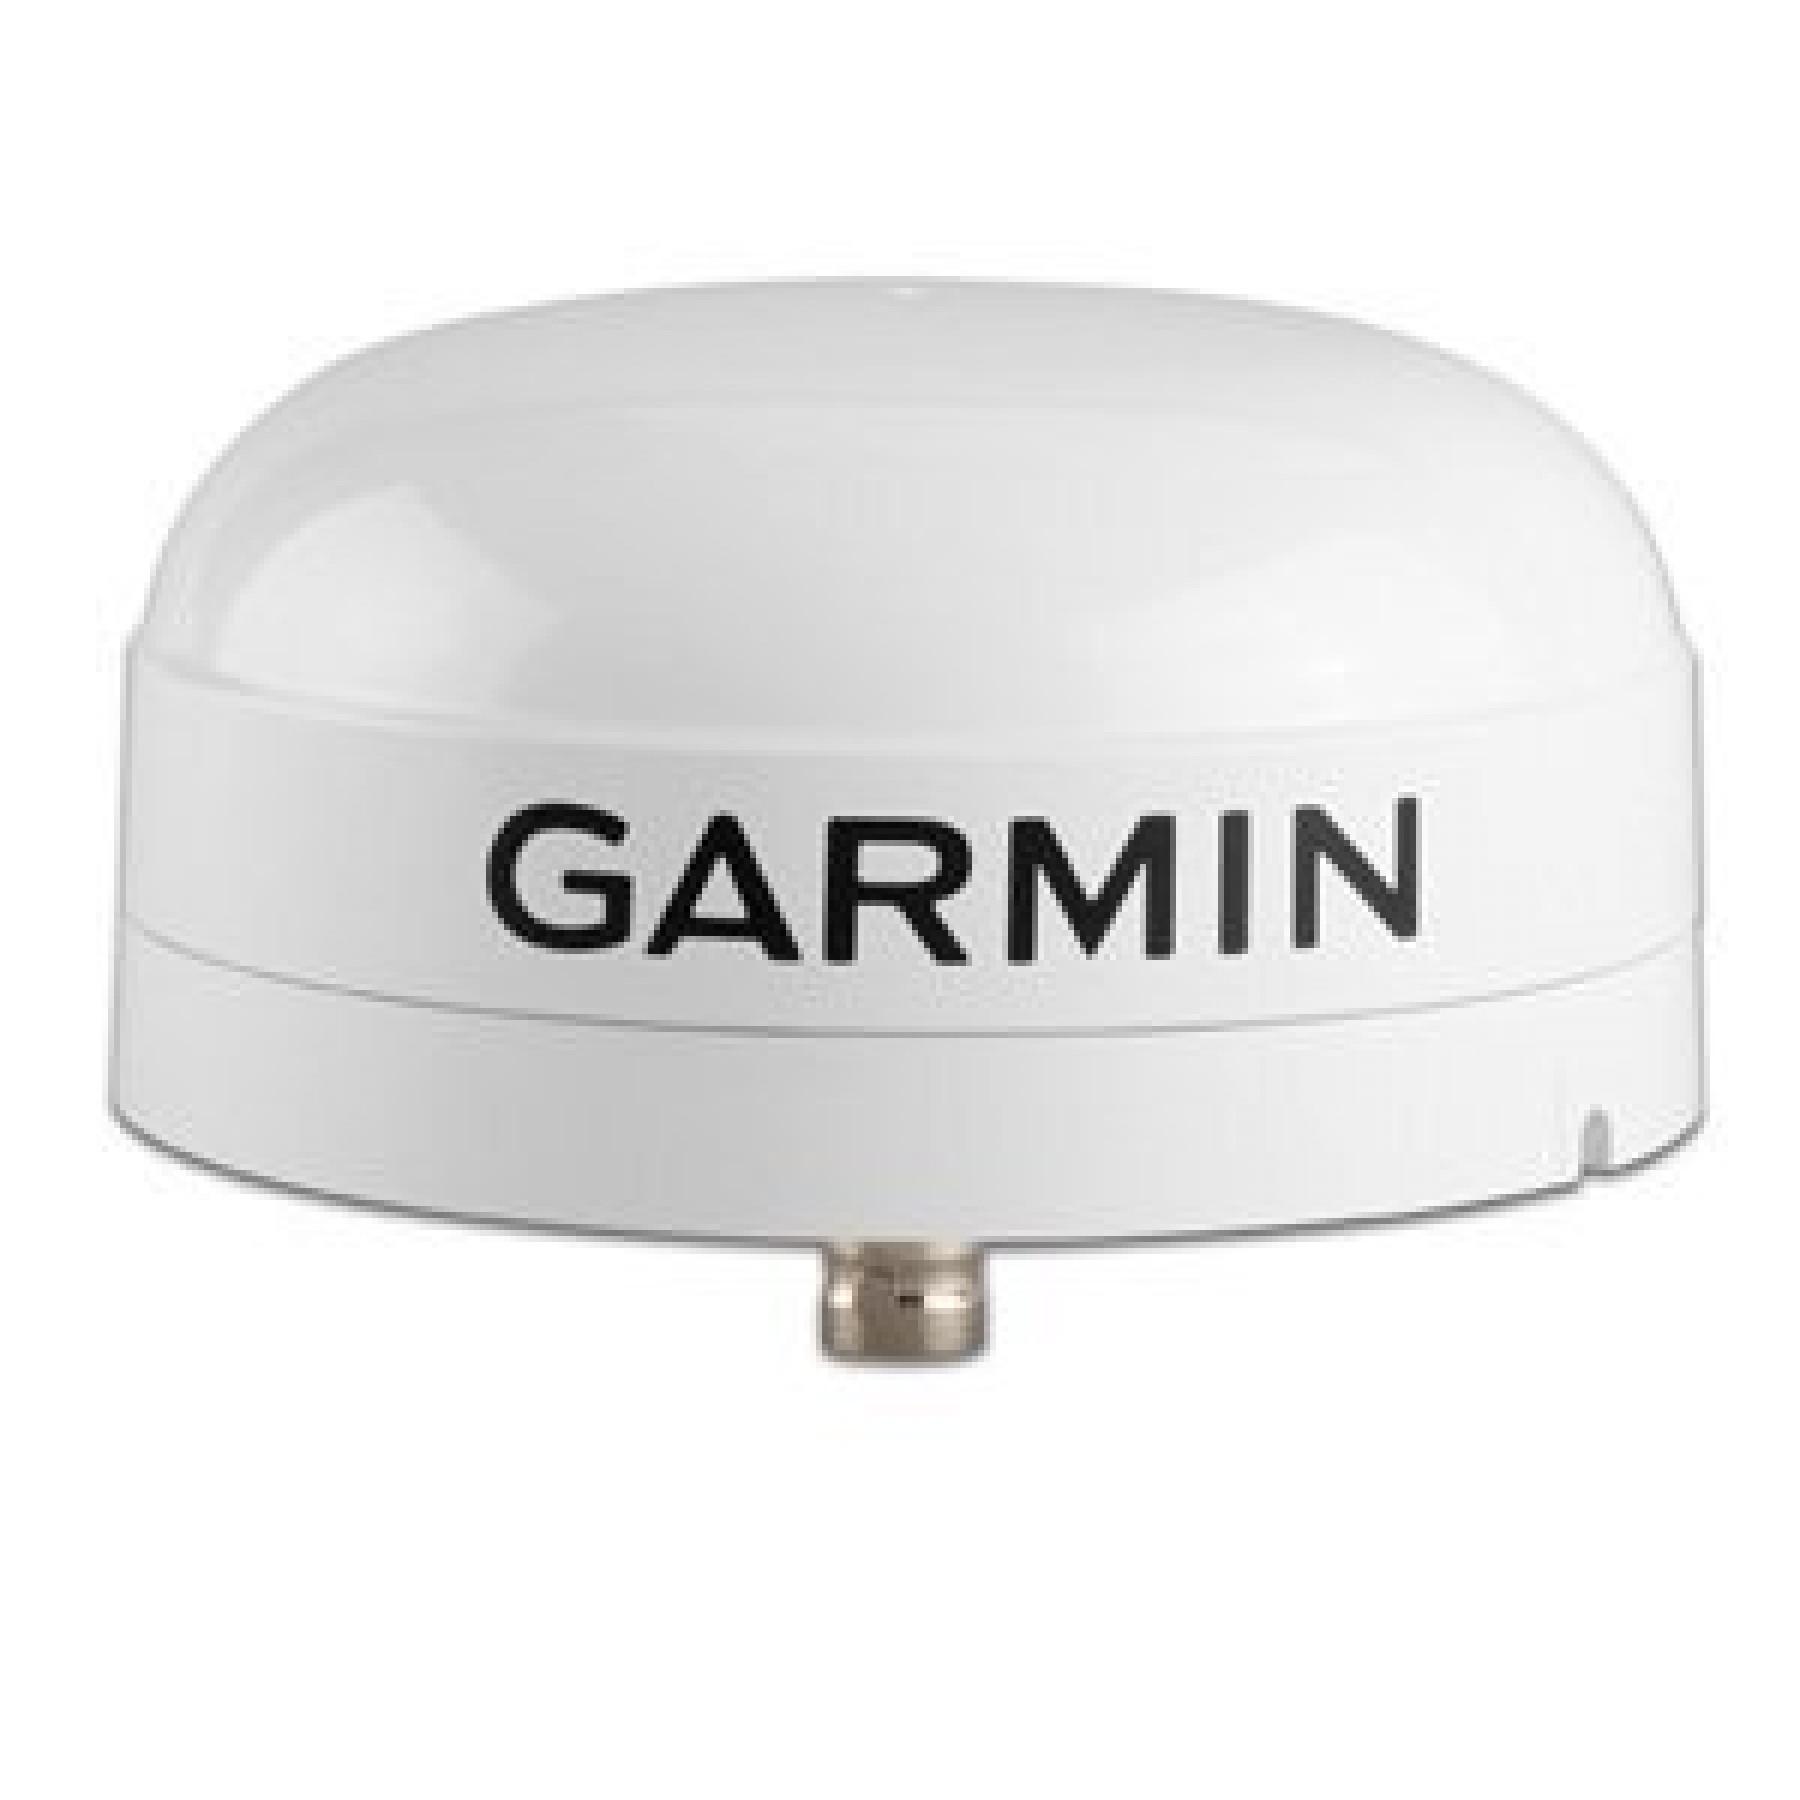 Antenne Garmin gps ga 38 gps/antenne glonass